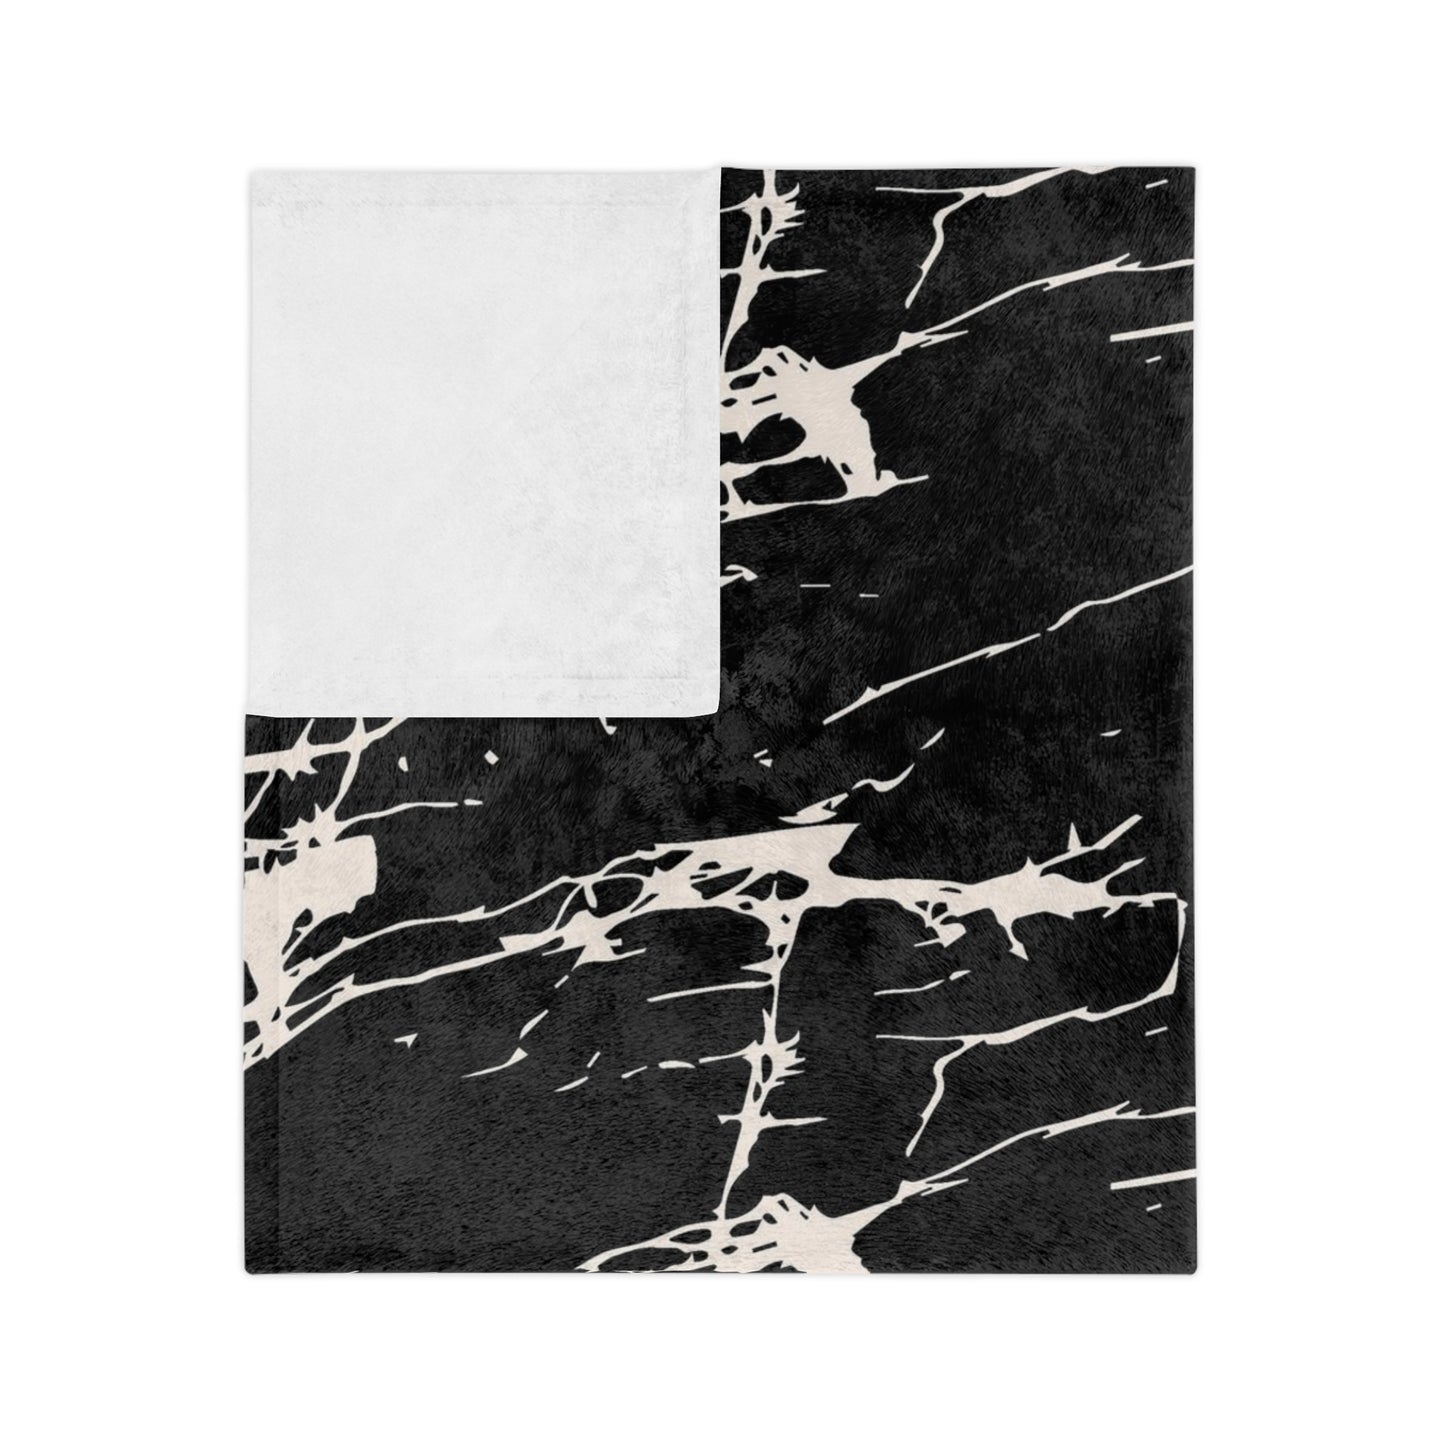 Marvelous Marble Theme Throw Sofa Bed Blanket Black White Marble - Soft Thick Velveteen Minky Throw Blanket